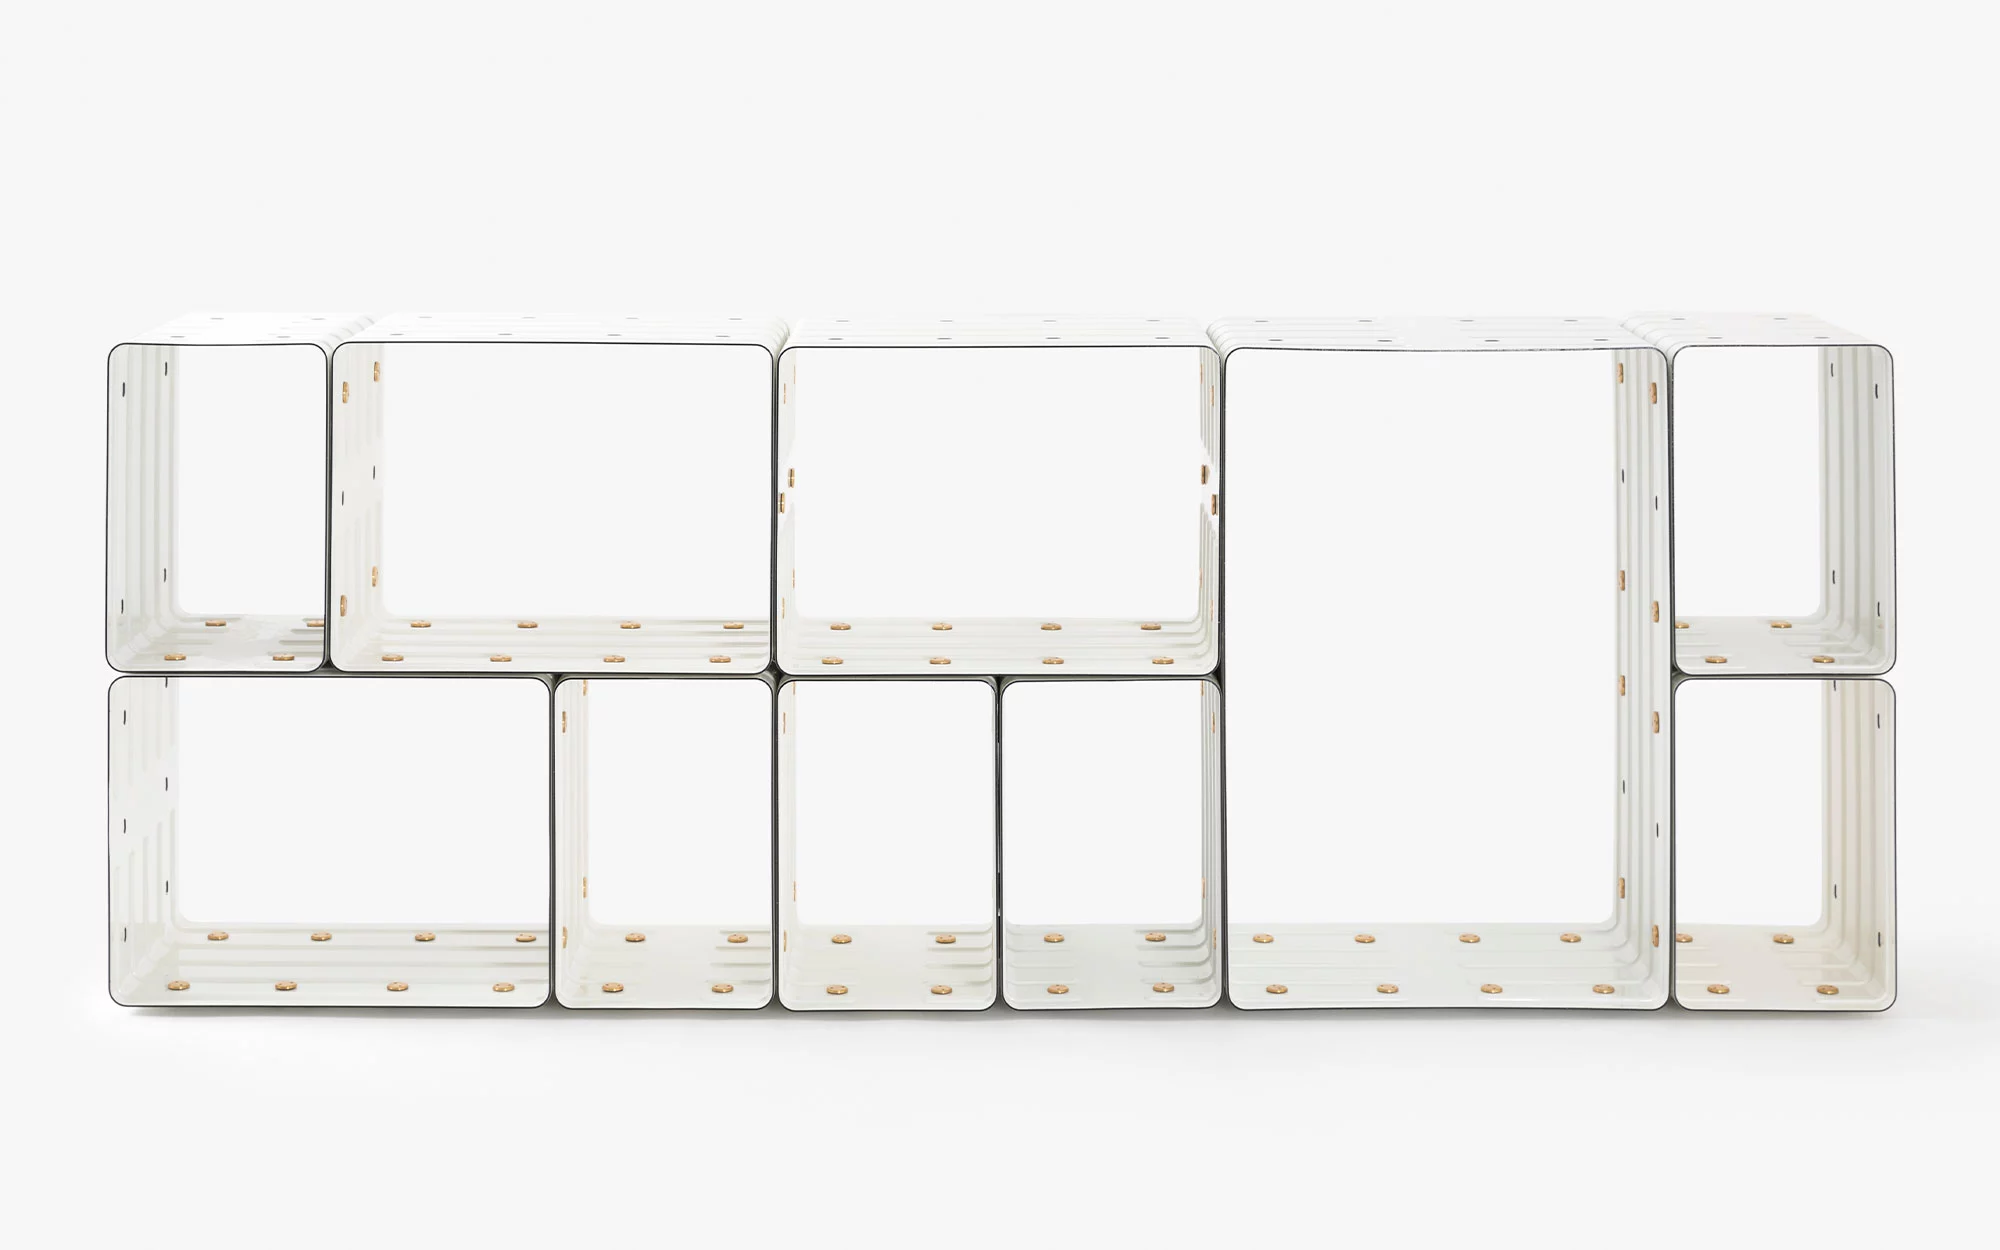 Quobus 1,3,6 monochromatic - Marc Newson - Side table - Galerie kreo